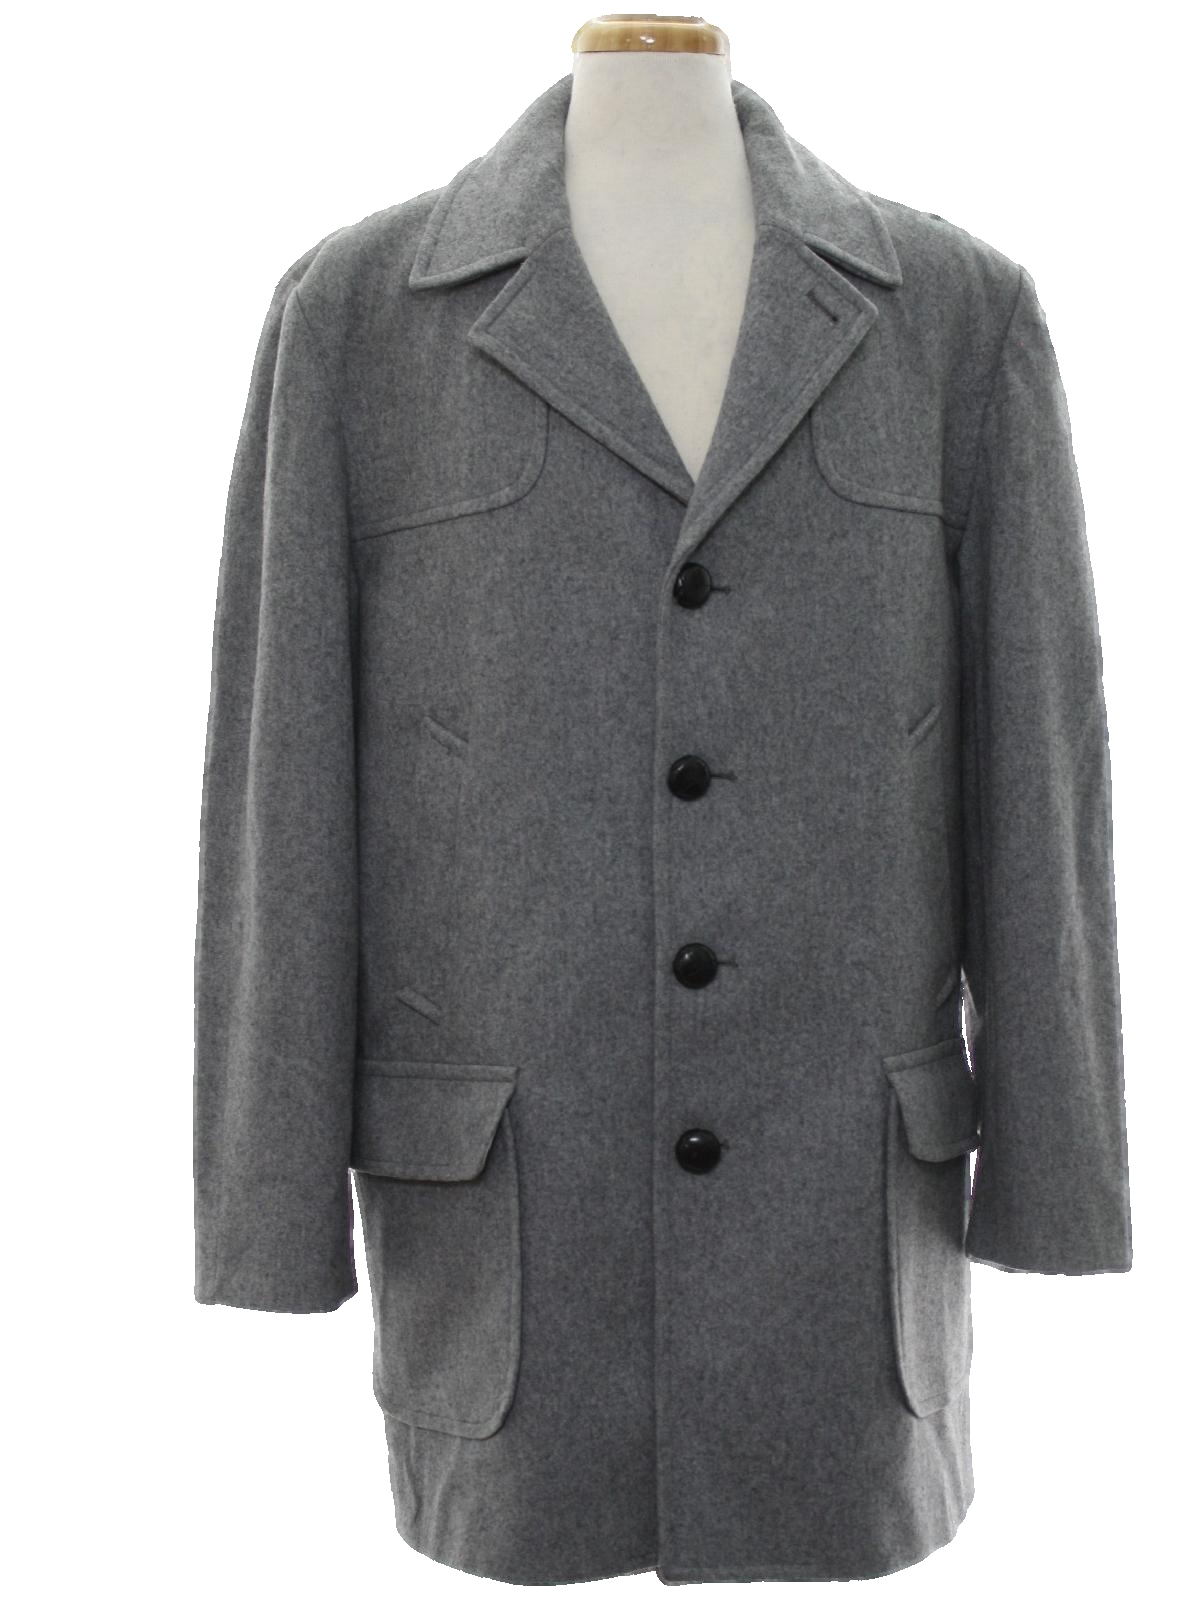 Seventies Pendleton Jacket: Early 70s -Pendleton- Mens heather grey ...